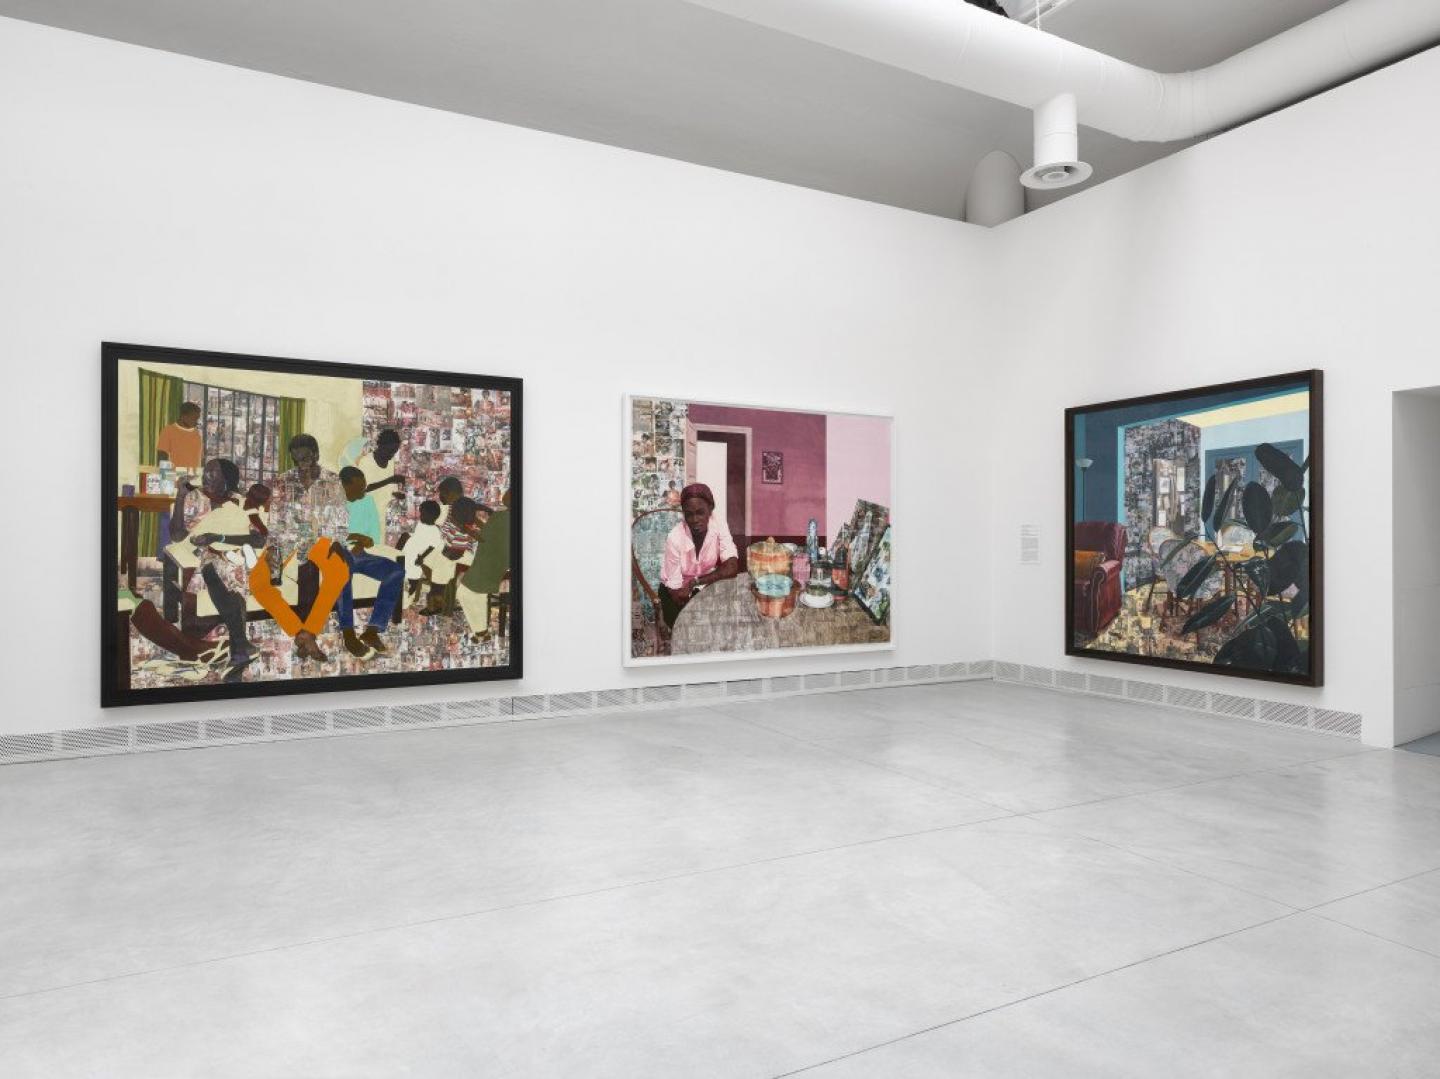 Njideka Akunyili Crosby, œuvres diverses, 2012-2017, Giardini, Court. the artist, Victoria Miro, and David Zwirner